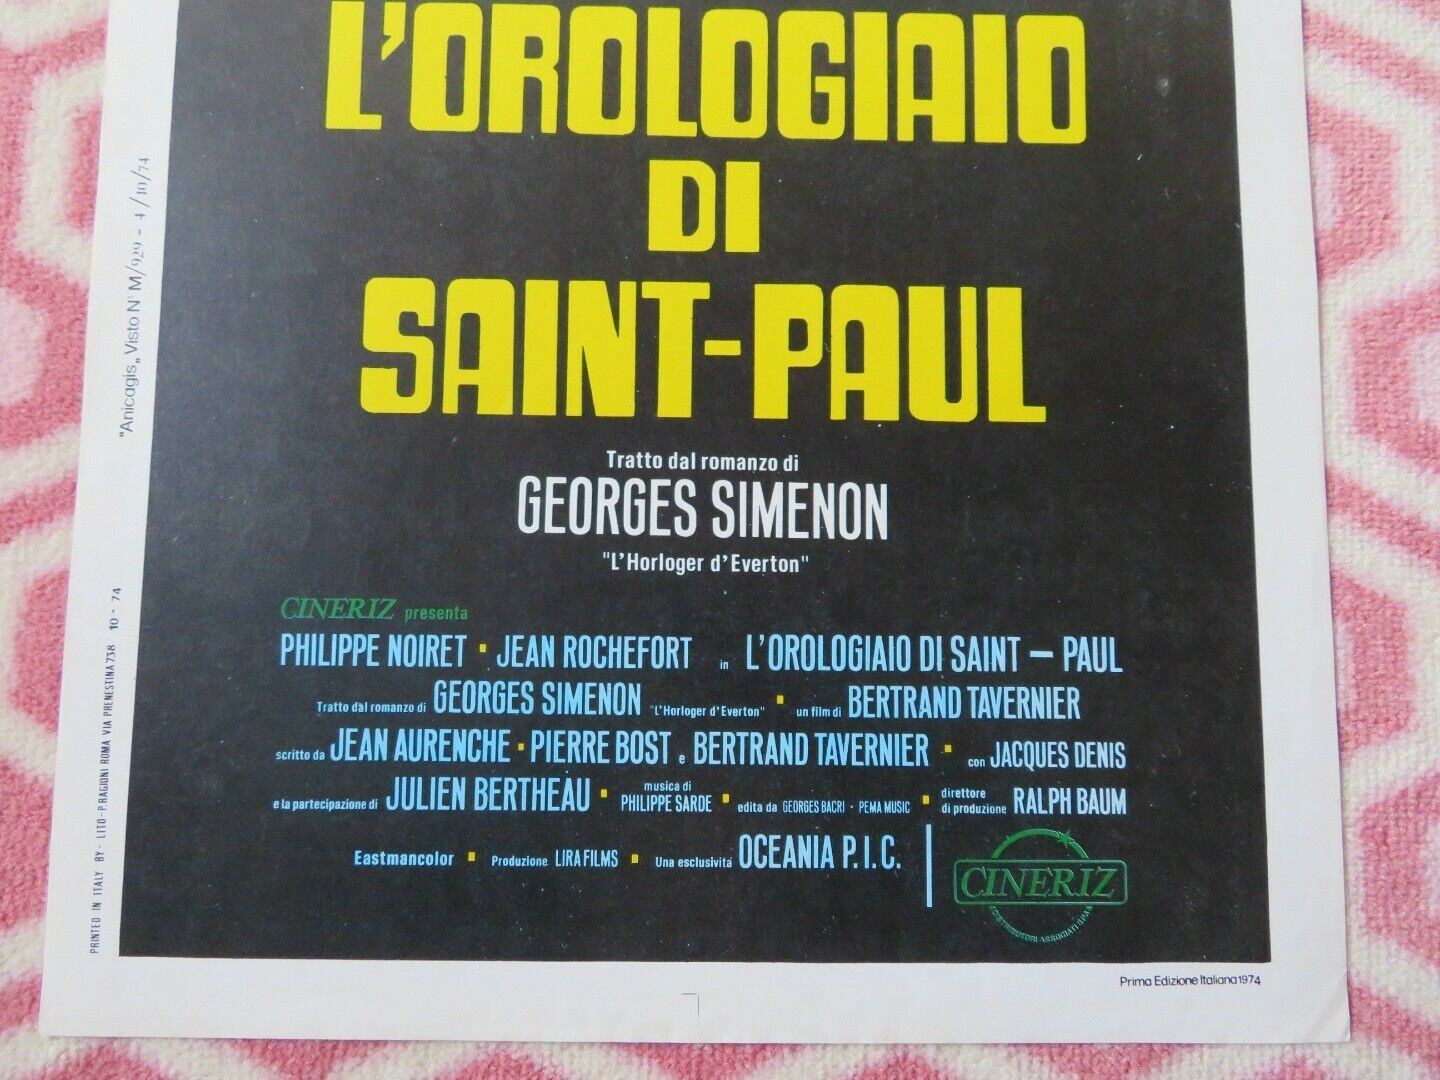 L'OROLOGIAIO DI SAINT-PAUL ITALIAN LOCANDINA (27.5"x13") POSTER P NOIRET 1974